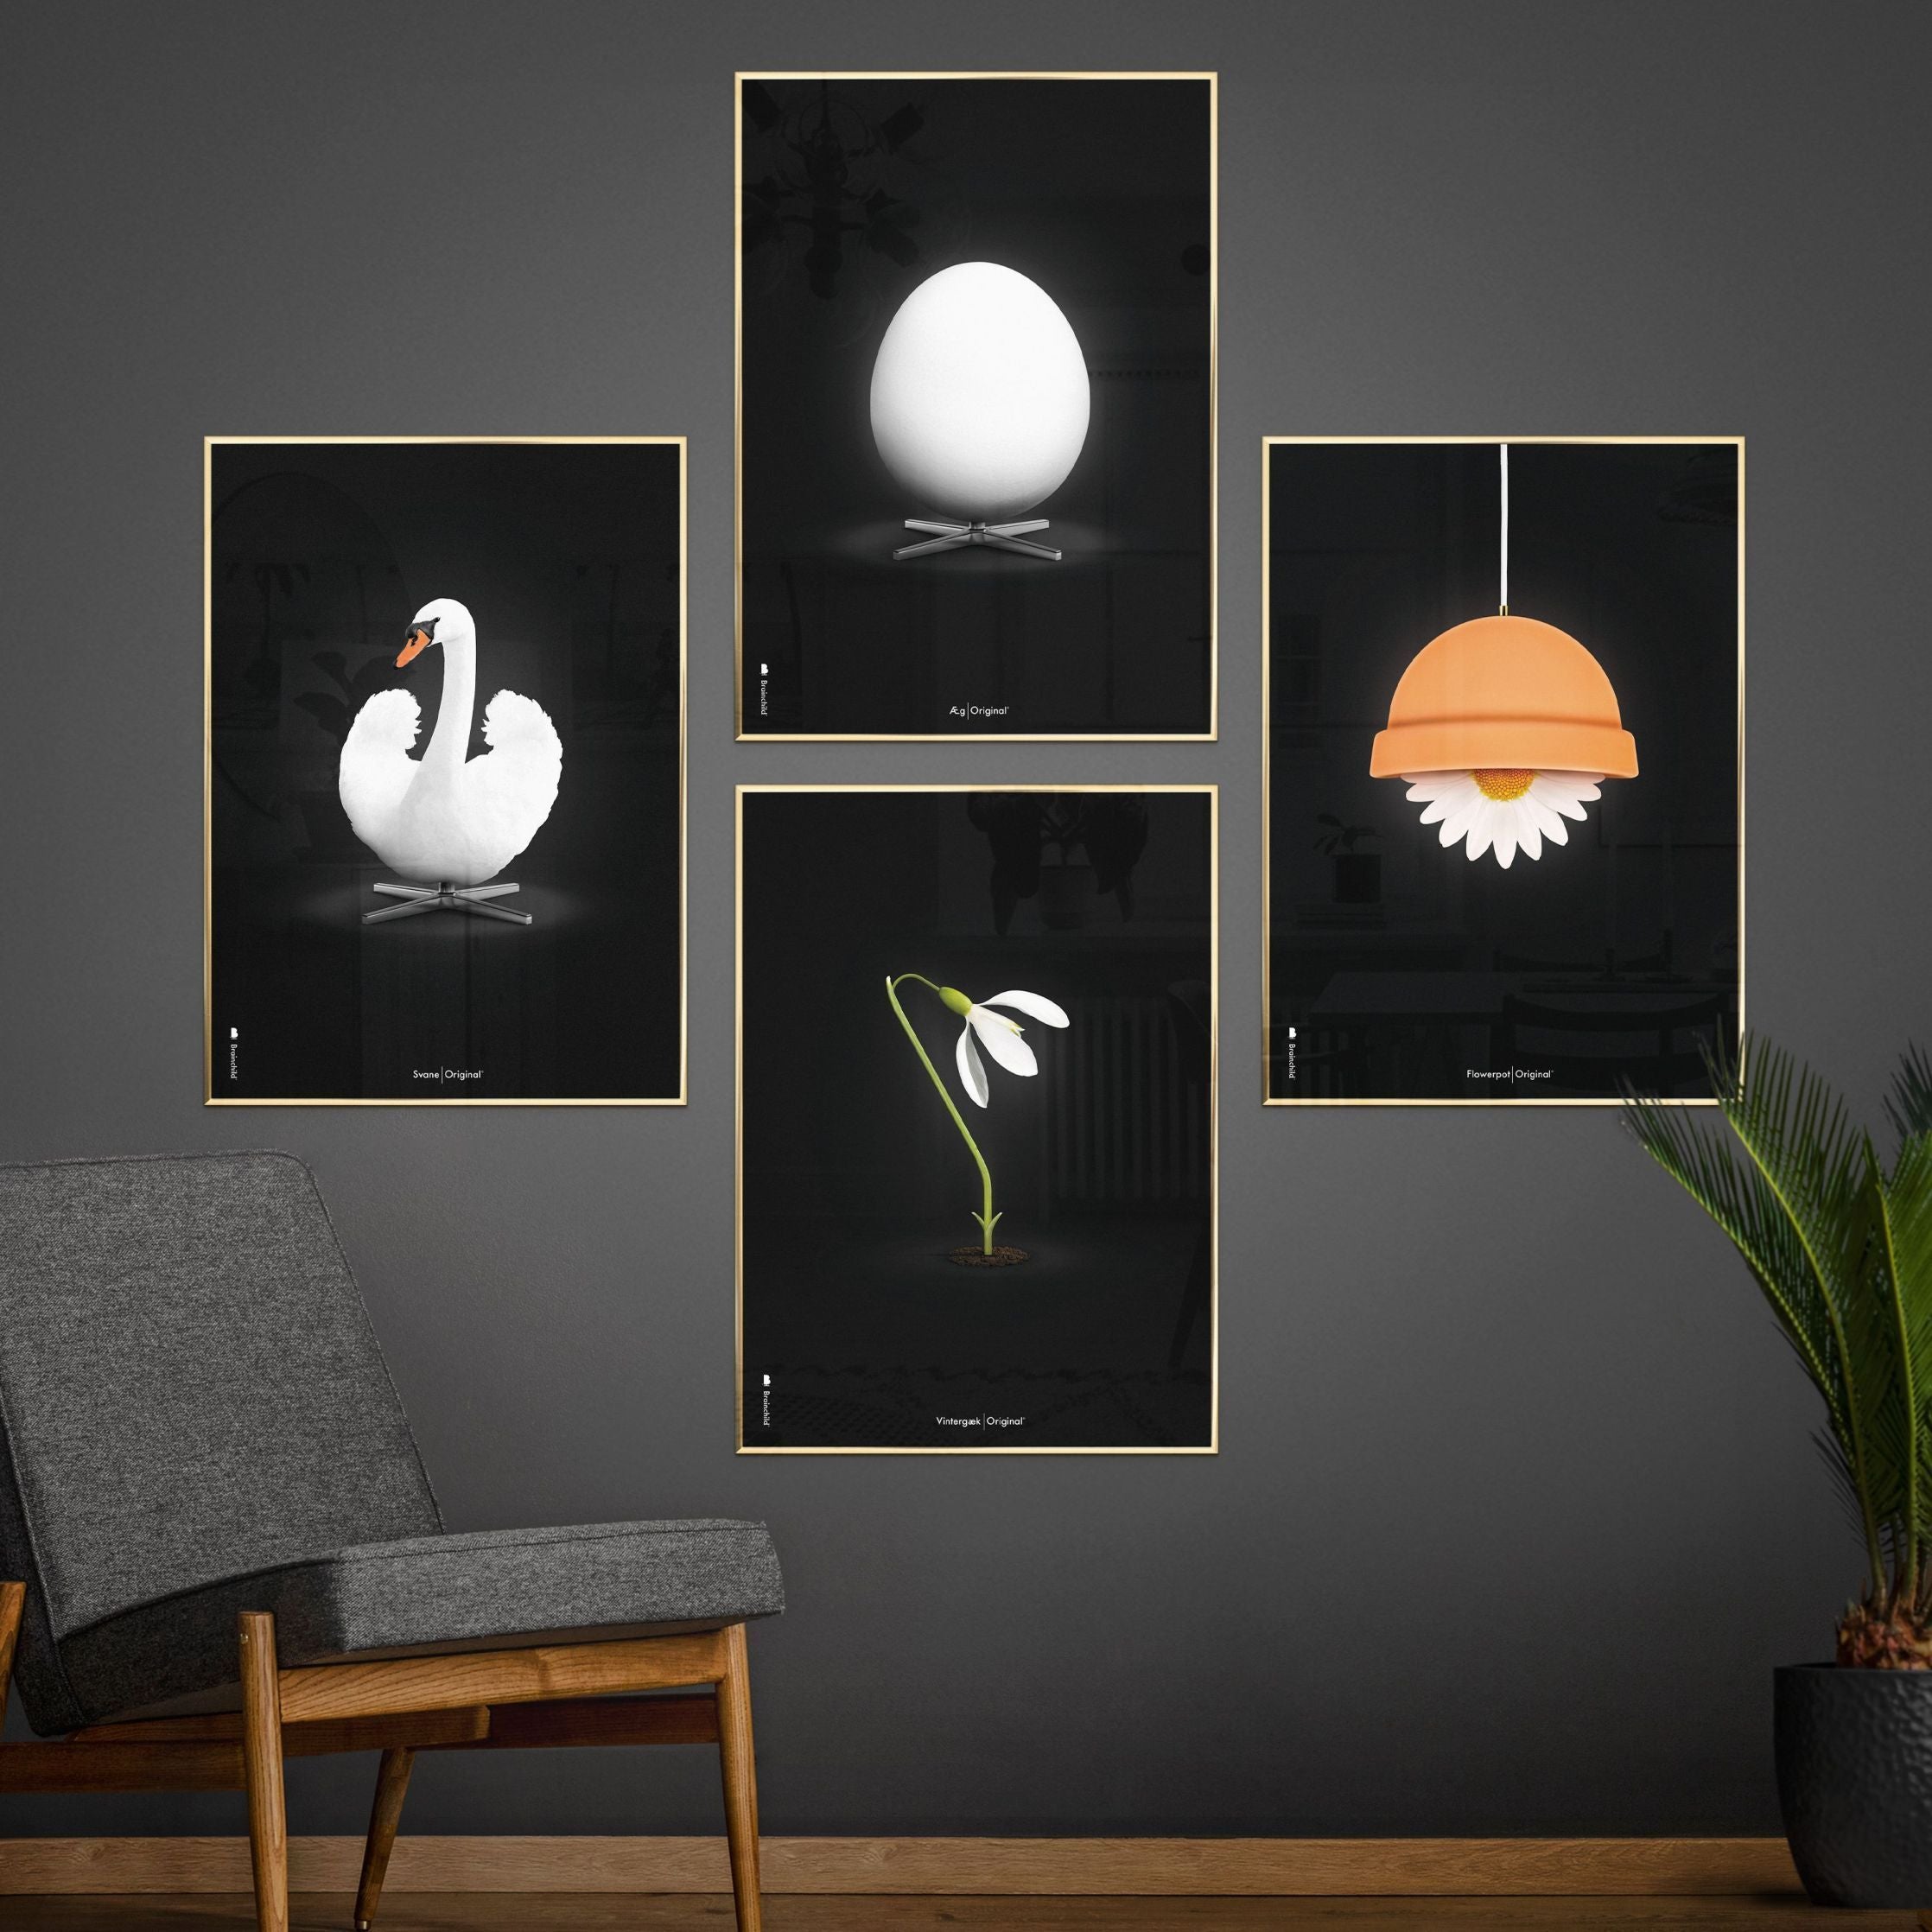 Brainchild Snowdrop Classic Poster, Frame Made Of Dark Wood 30x40 Cm, Black Background